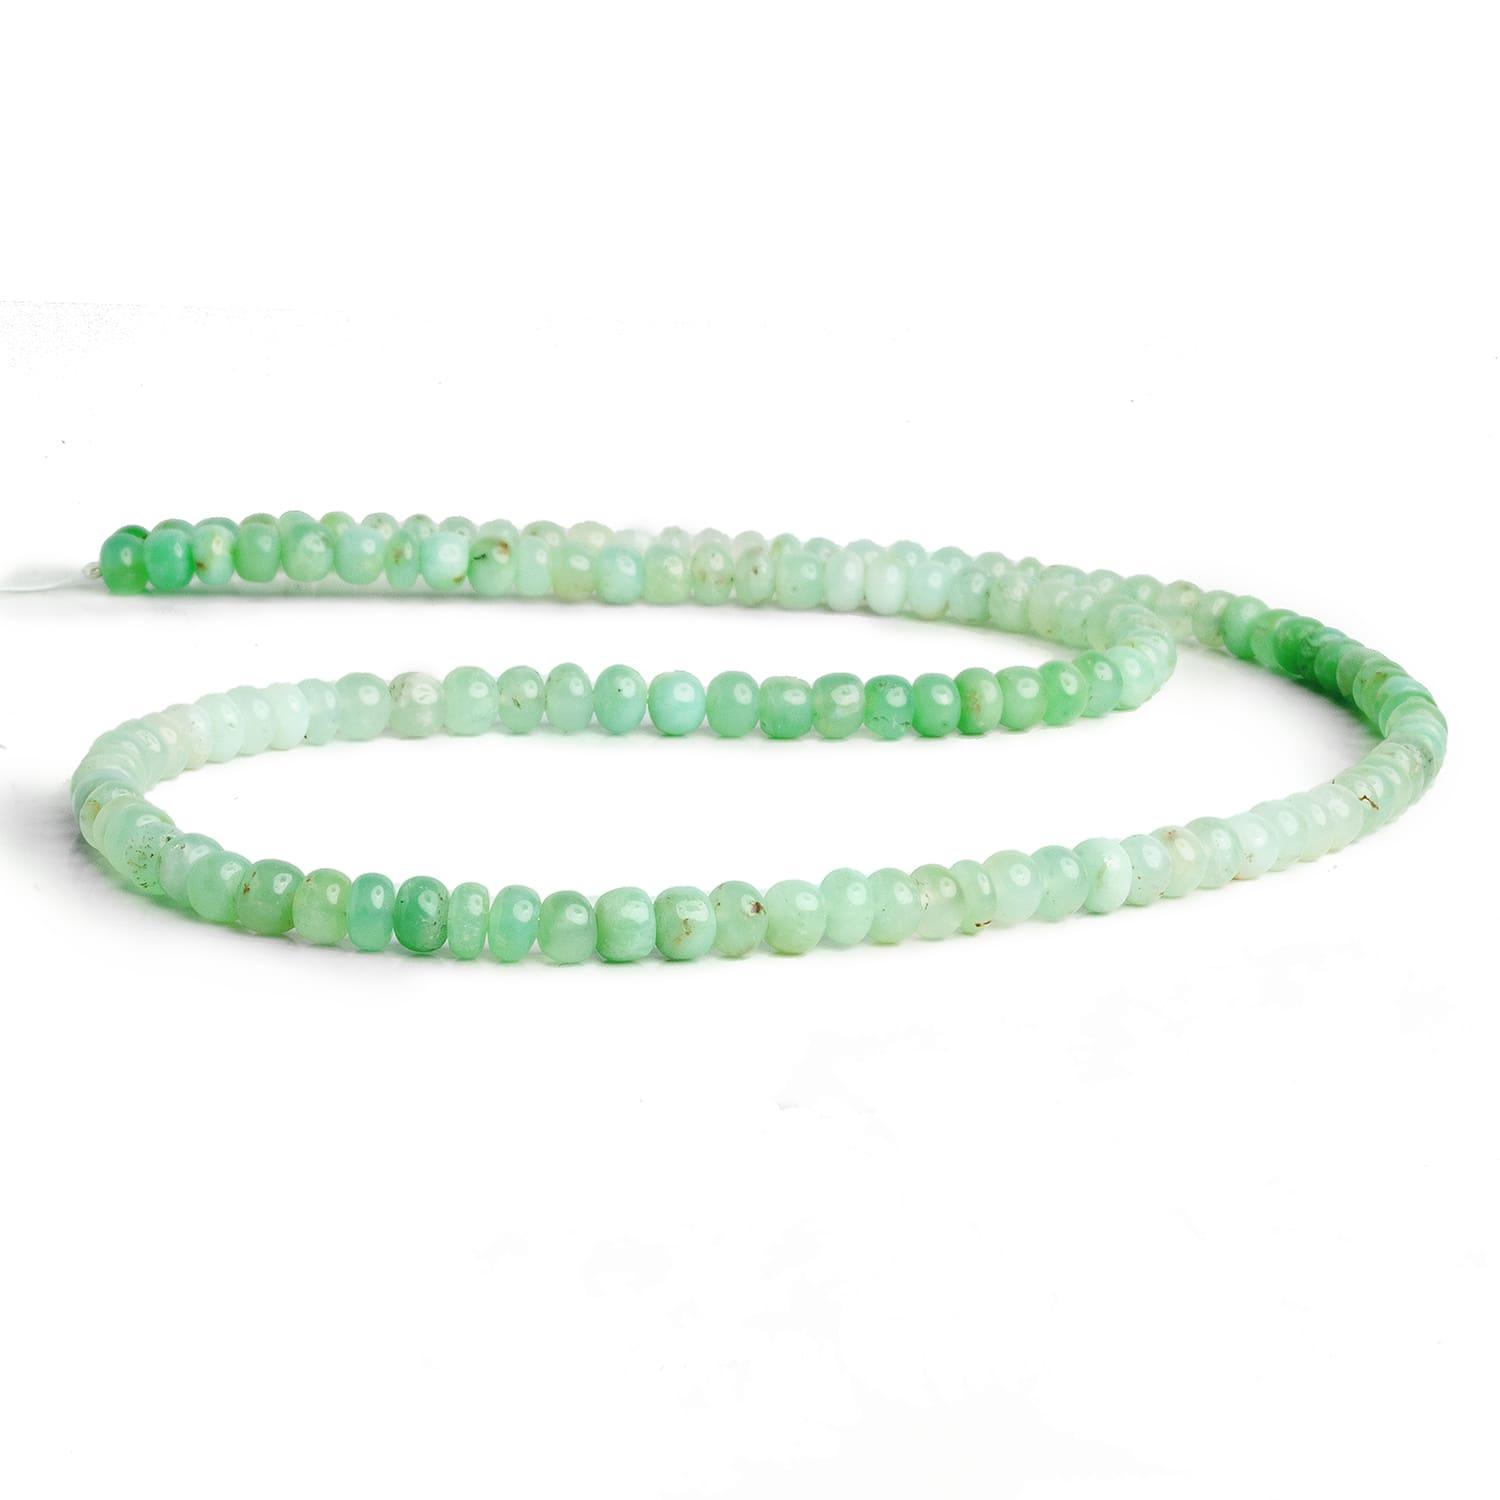 5-6mm Green Tanzanian Opal Plain Rondelle Beads 18 inch 130pcs